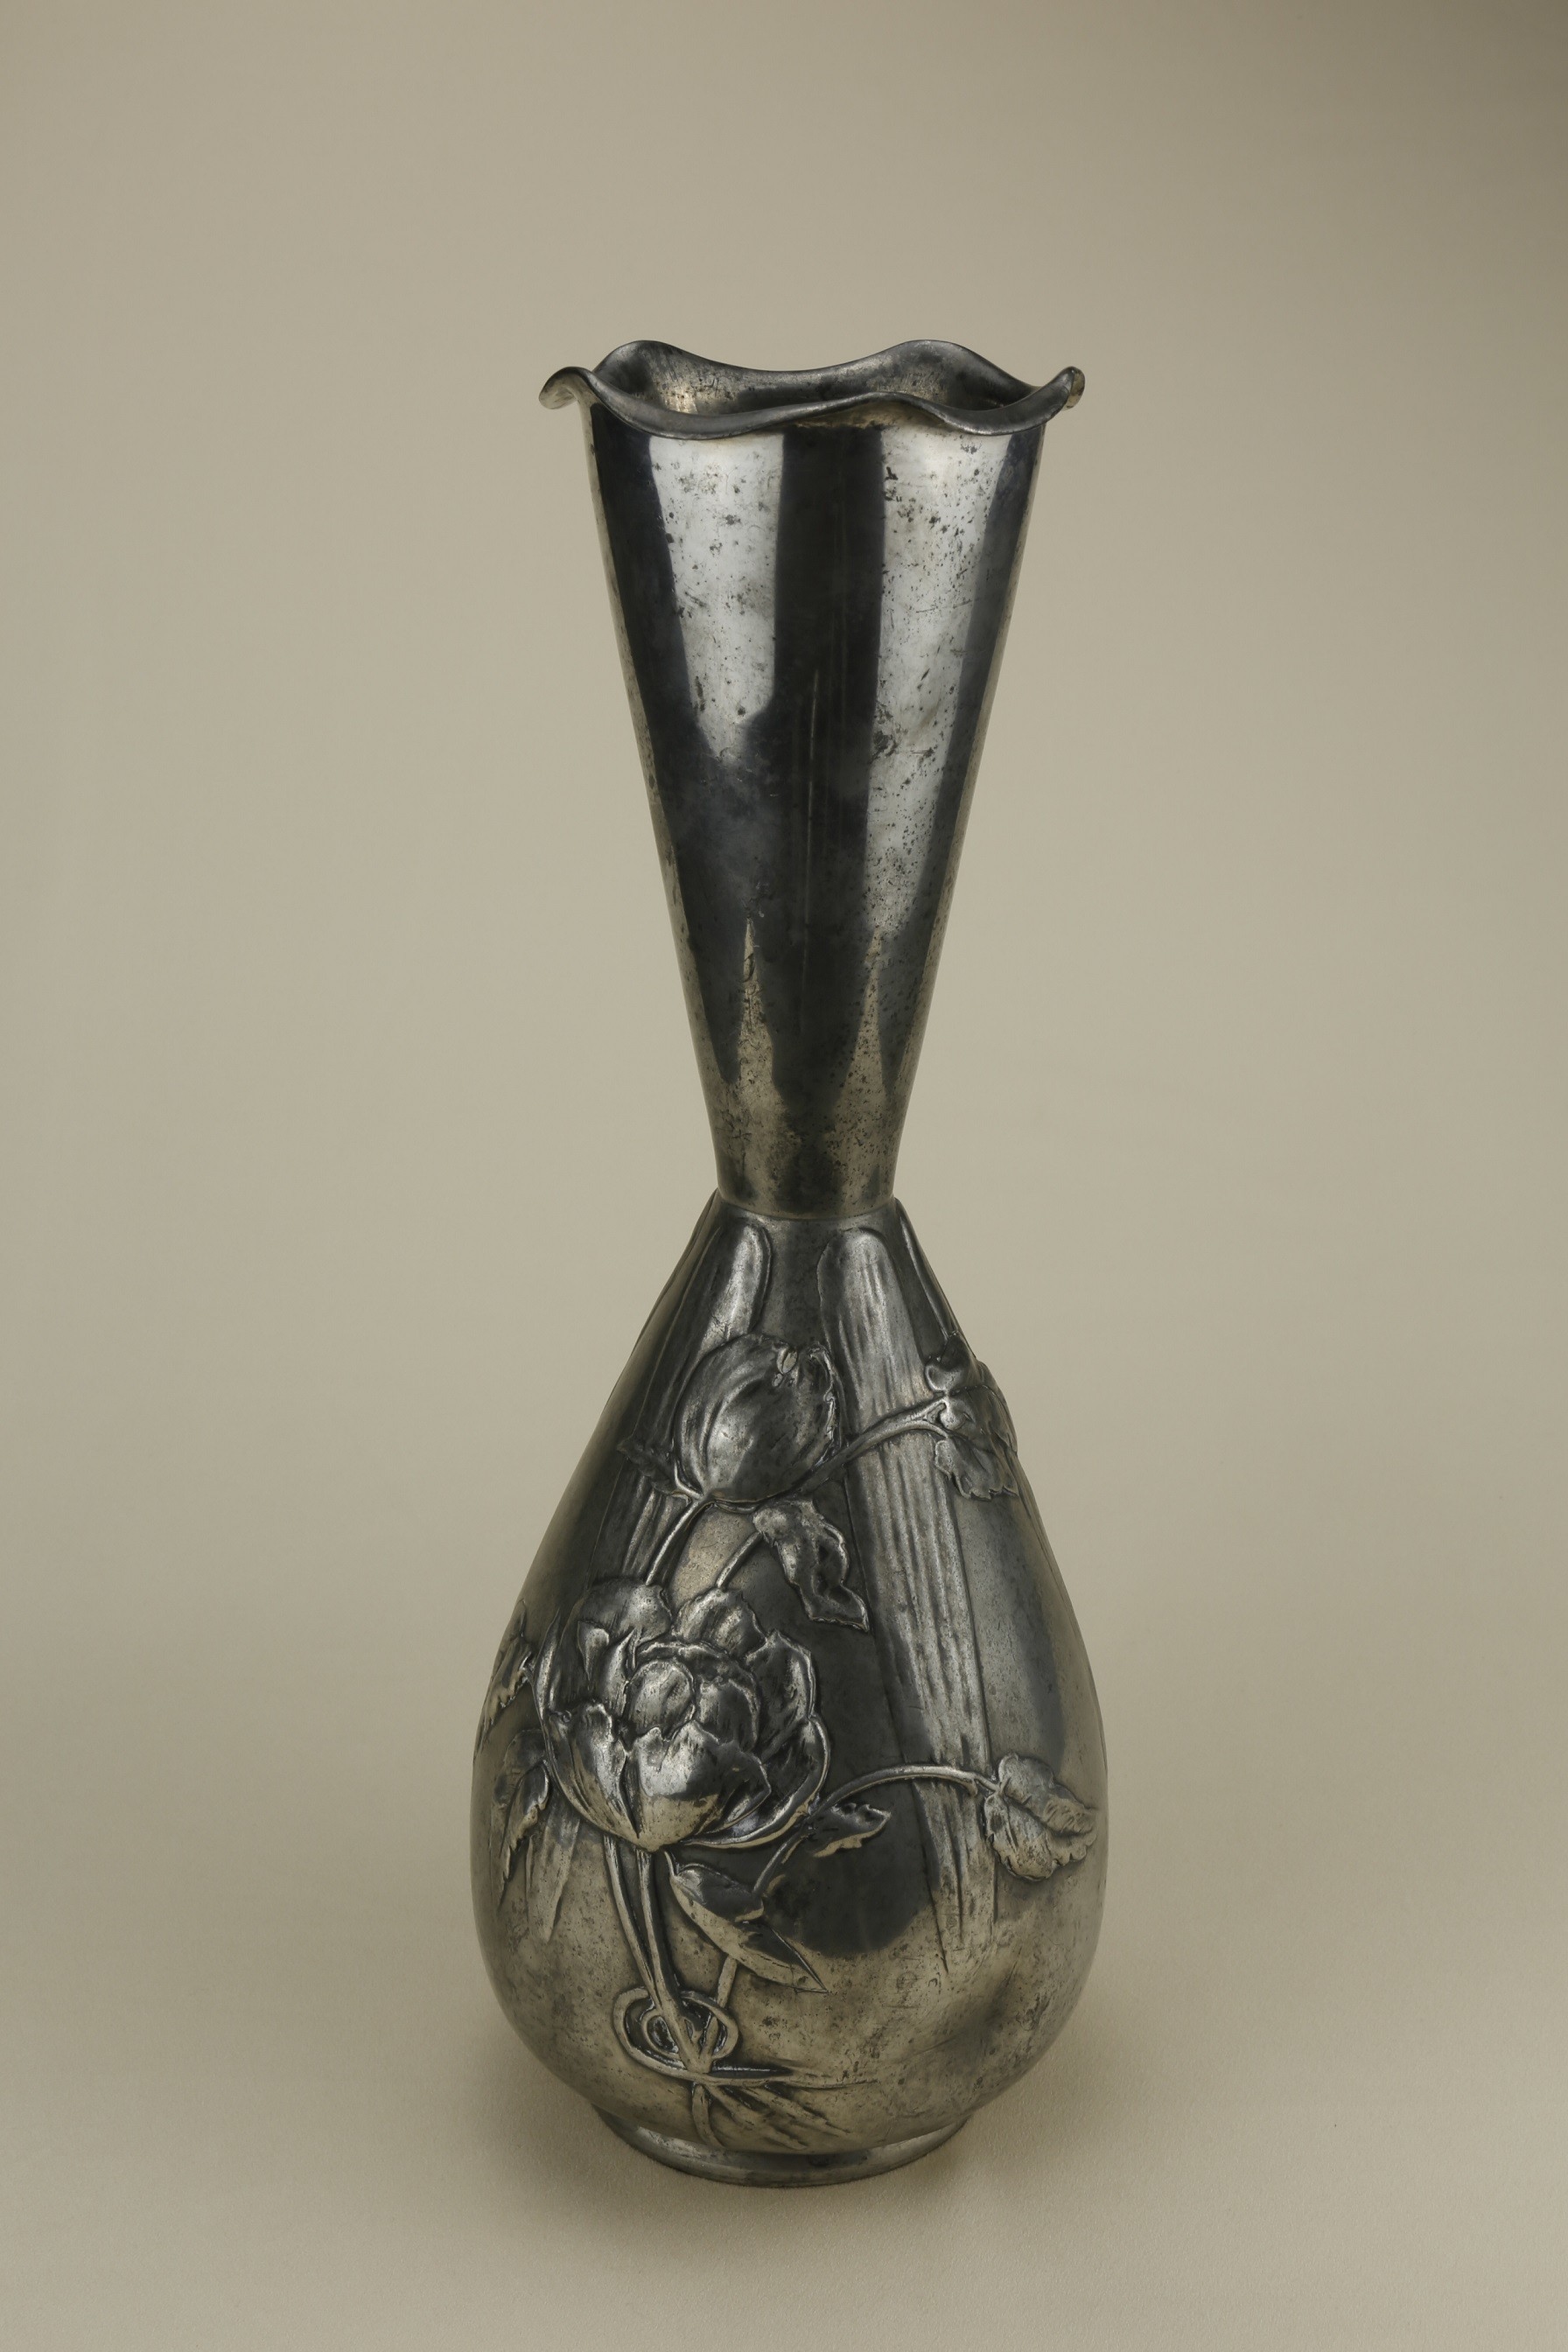 Vase mit Trollblumen. Kayser 4103 (KreisMuseum Zons CC BY-NC-SA)